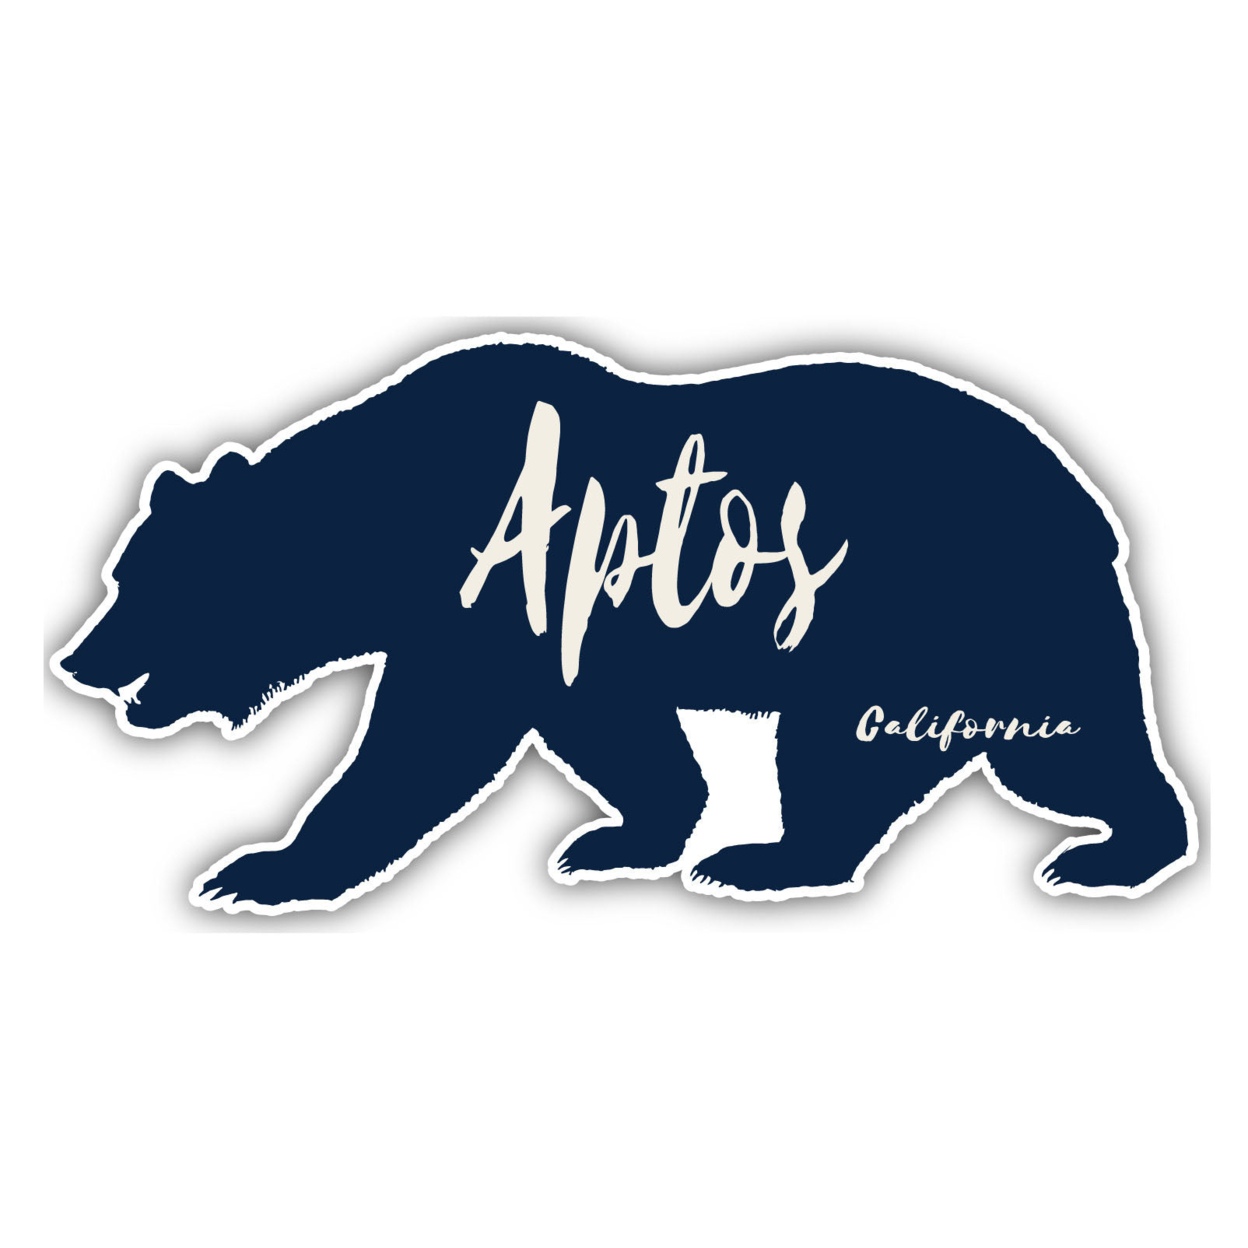 Aptos California Souvenir Decorative Stickers (Choose Theme And Size) - Single Unit, 8-Inch, Tent